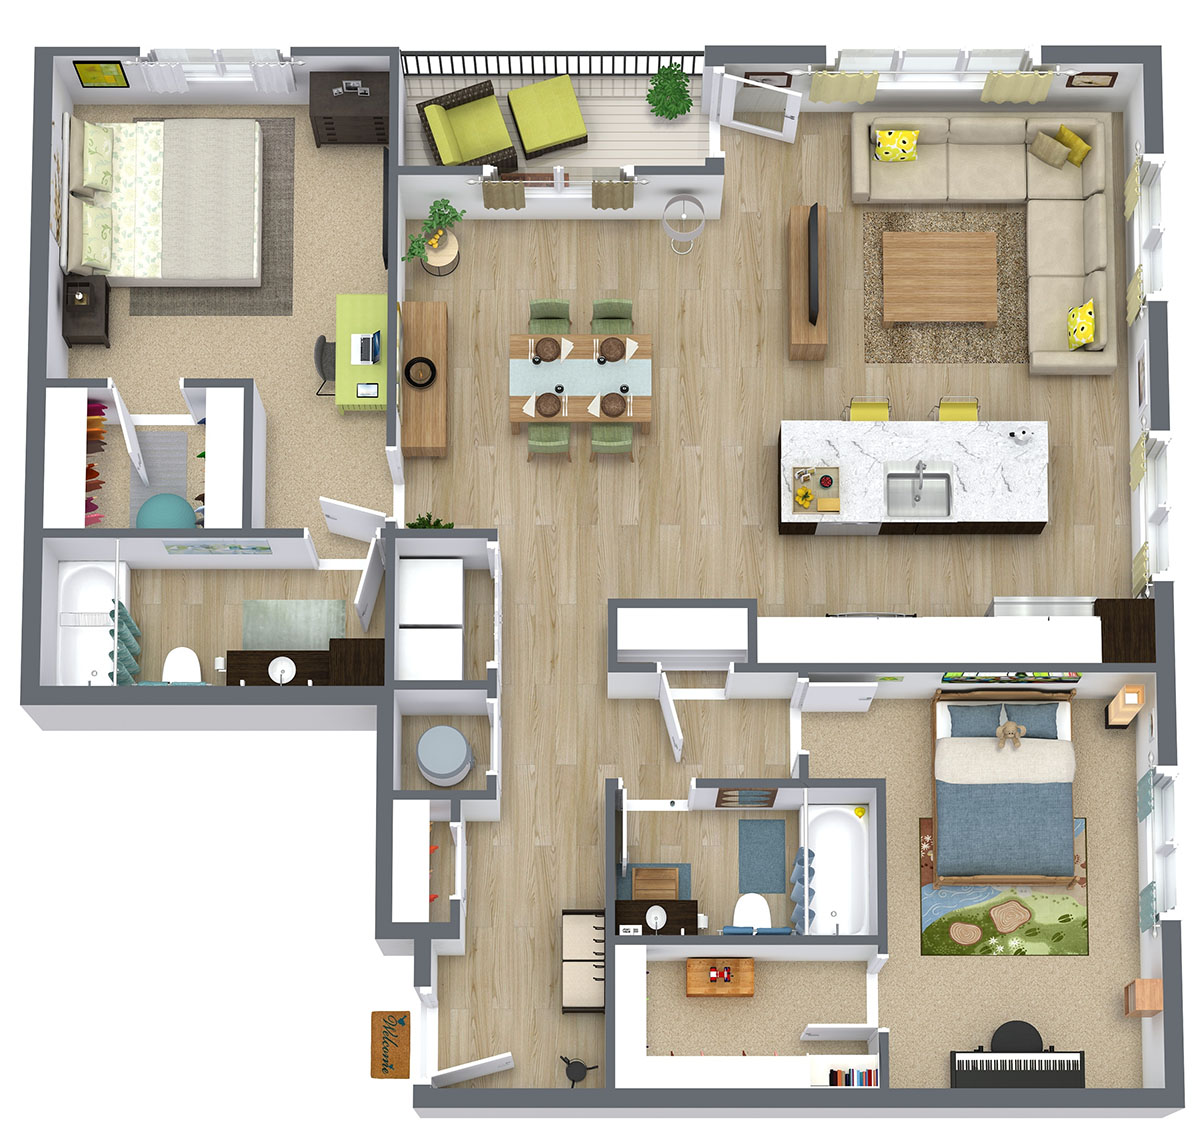 ivi Apartments - Floorplan - Clover